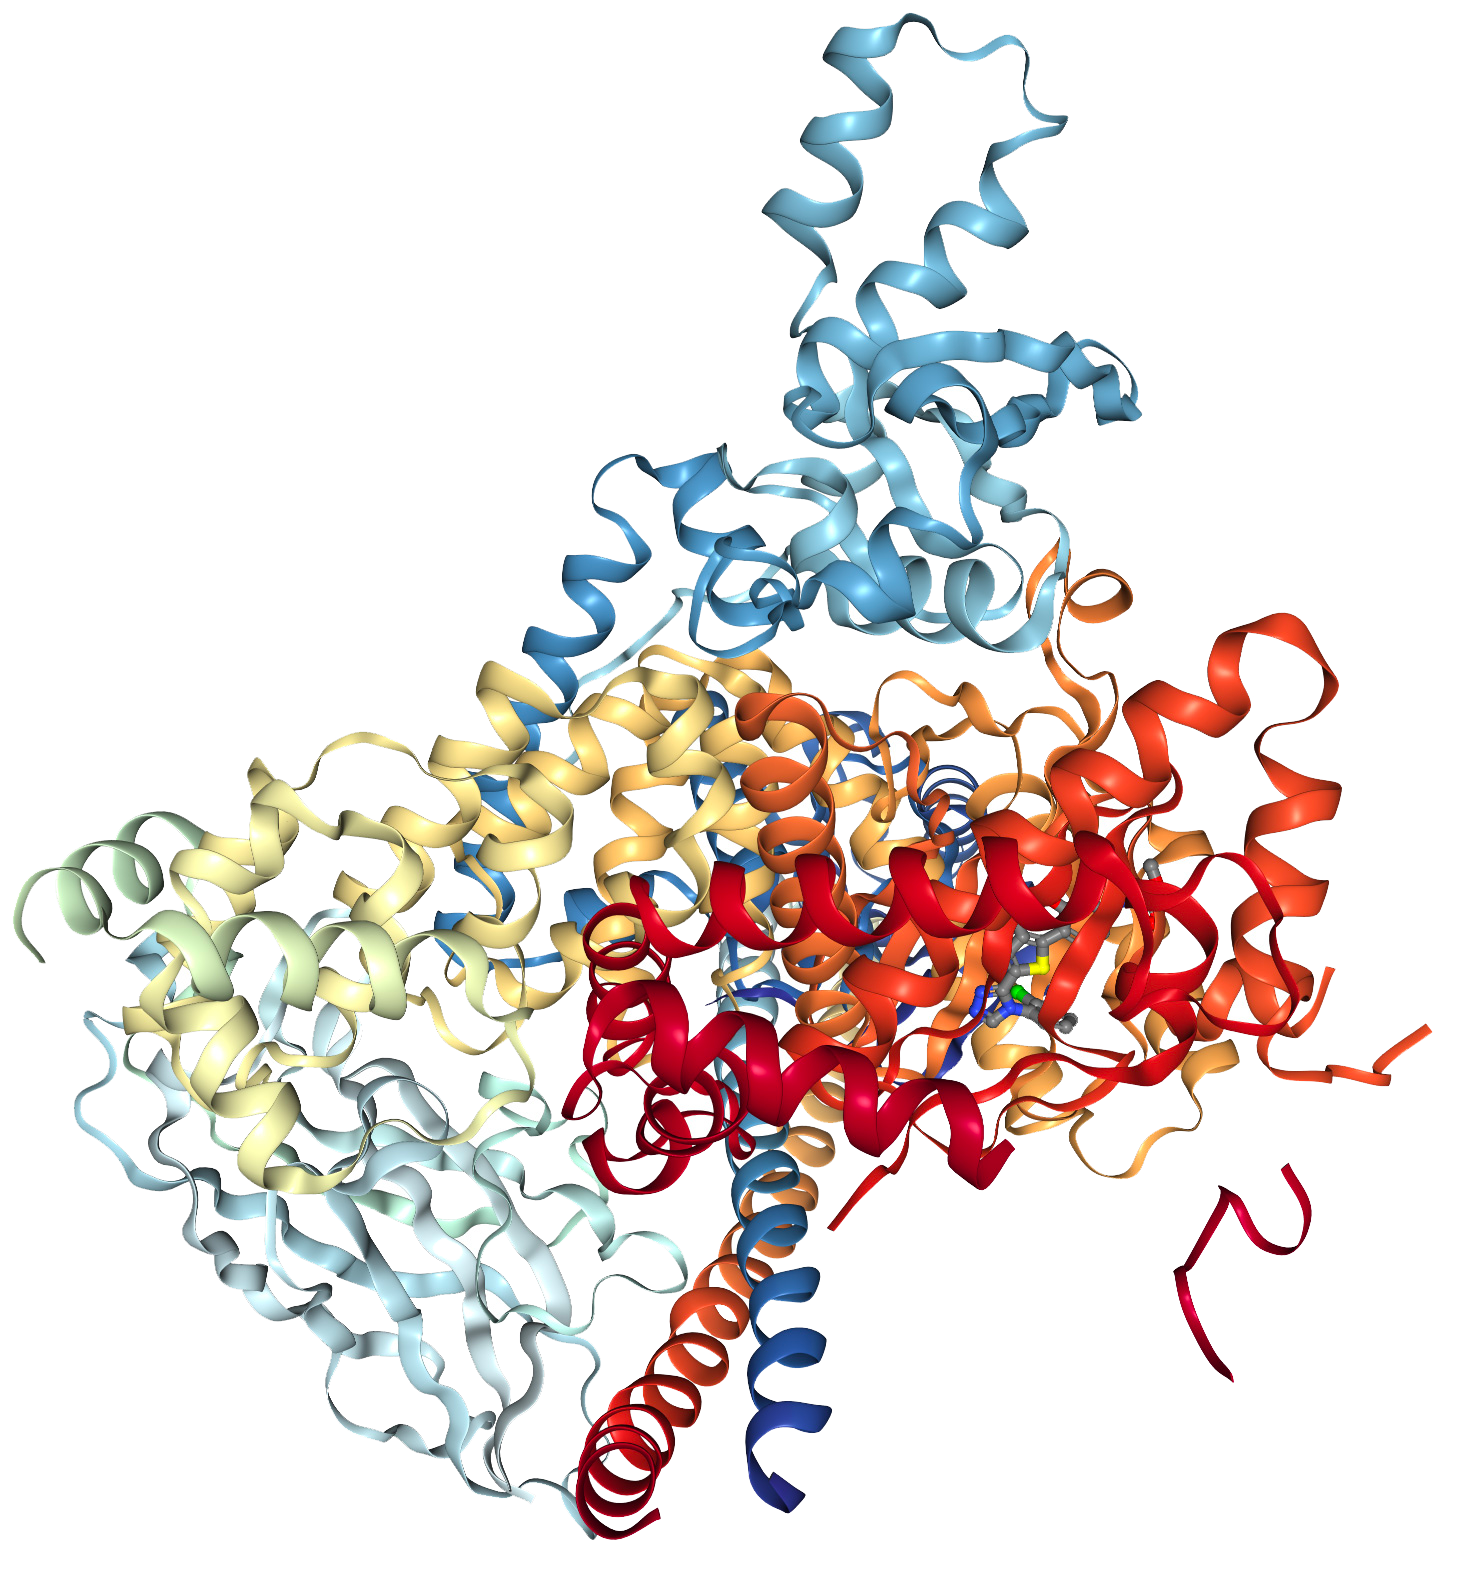 PIK3CA protein structure